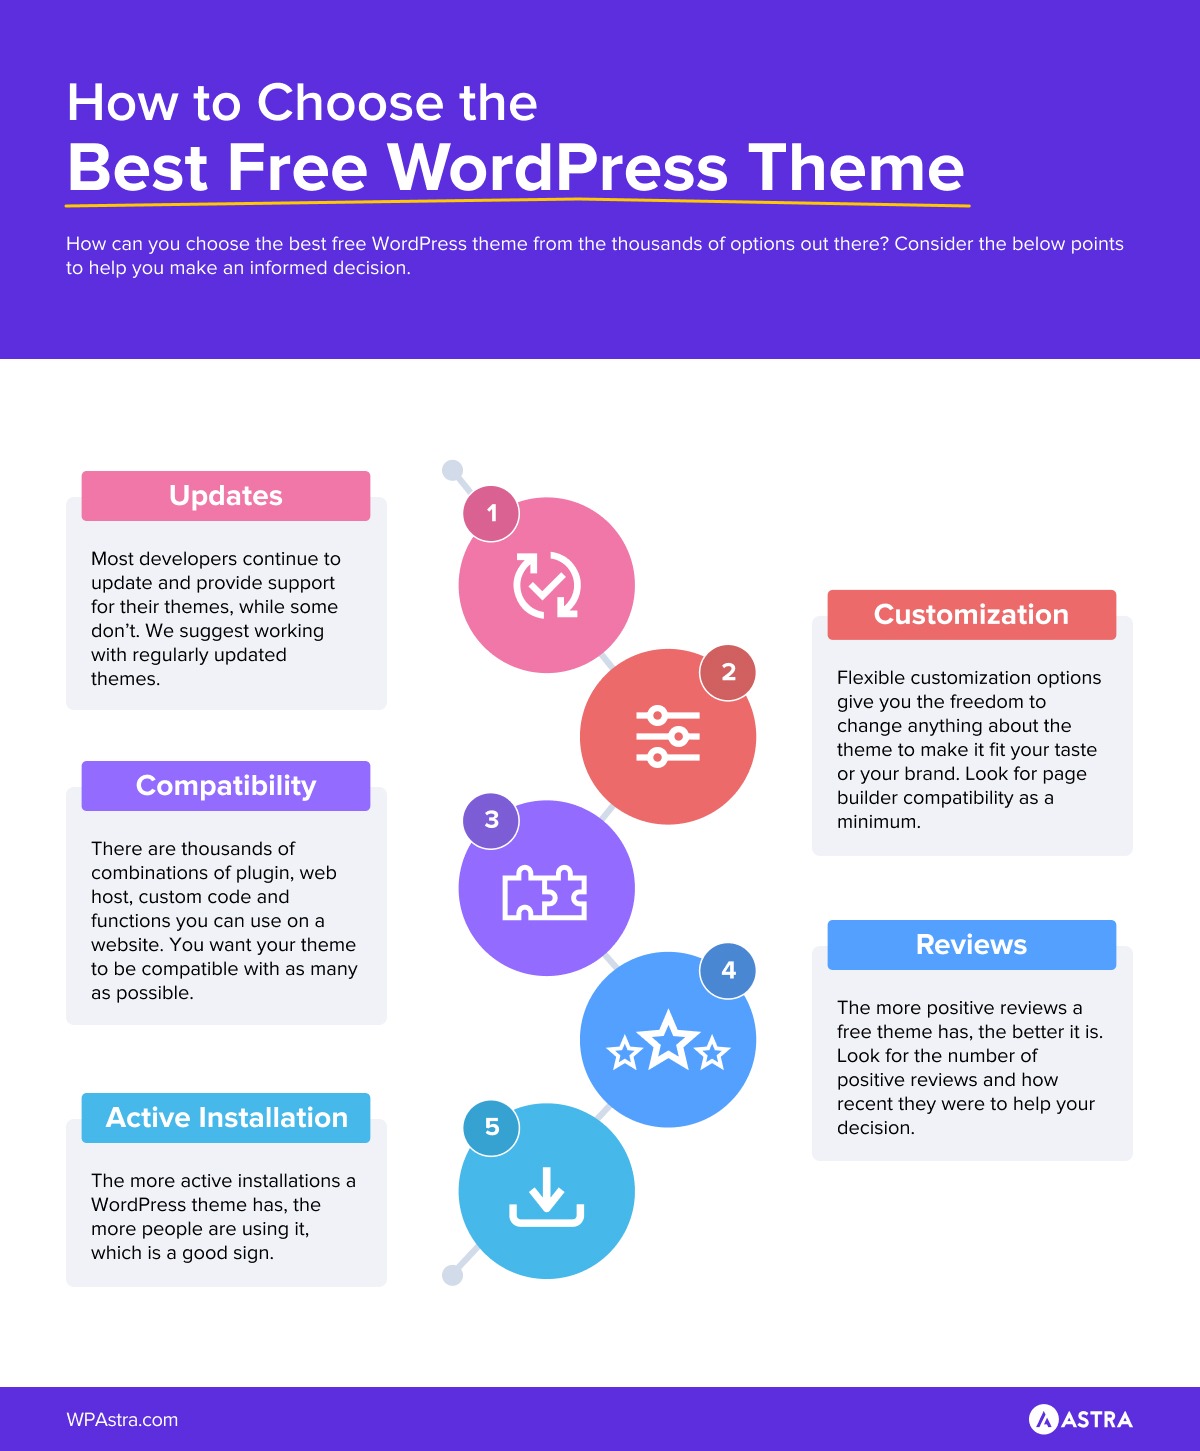 How to choose best free WordPress theme